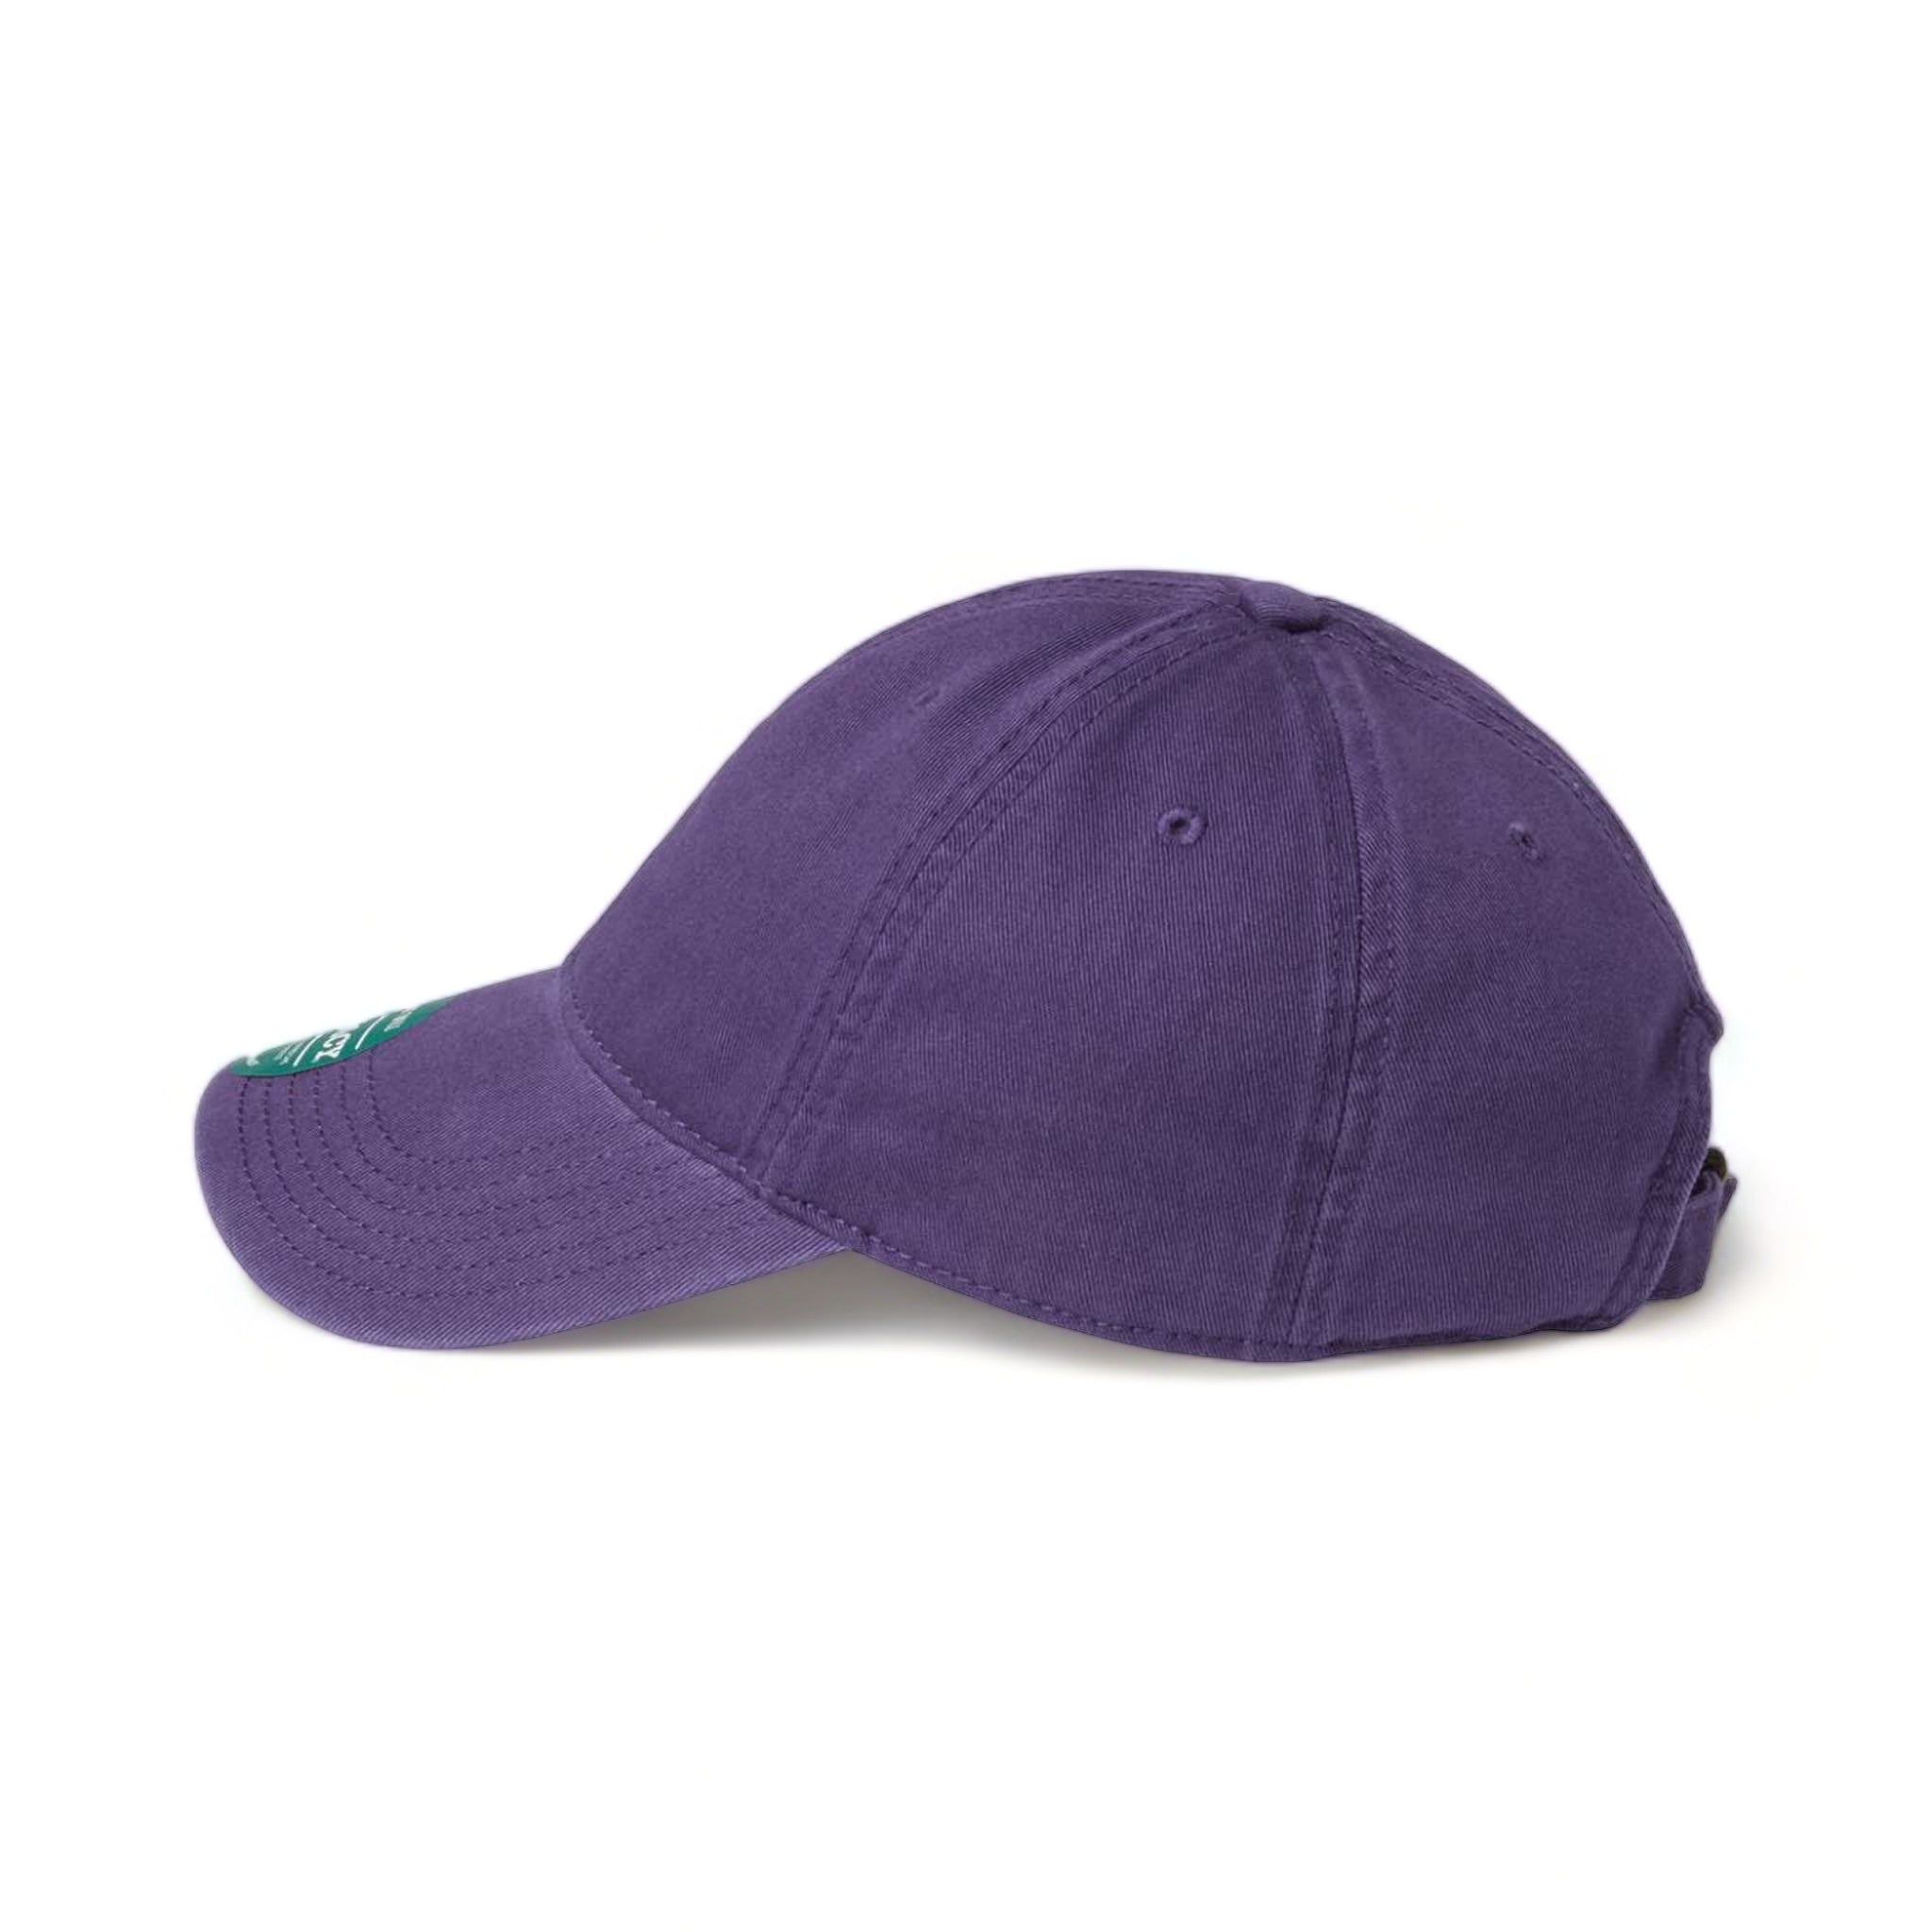 Side view of LEGACY EZA custom hat in purple